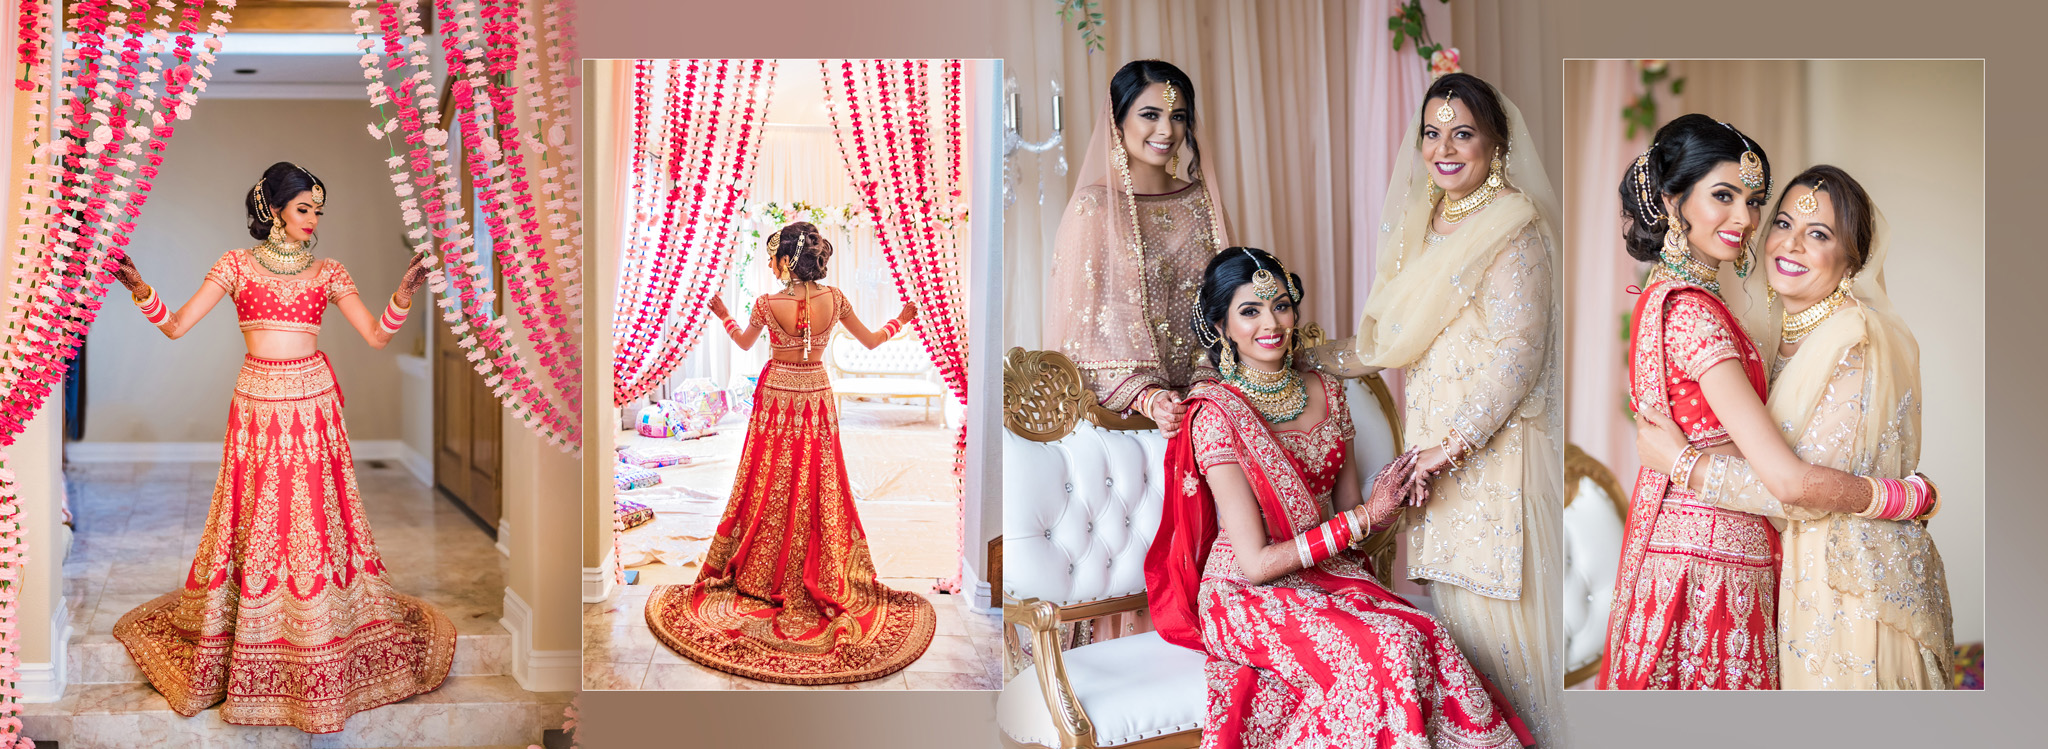 Indian wedding album design bridal portraits